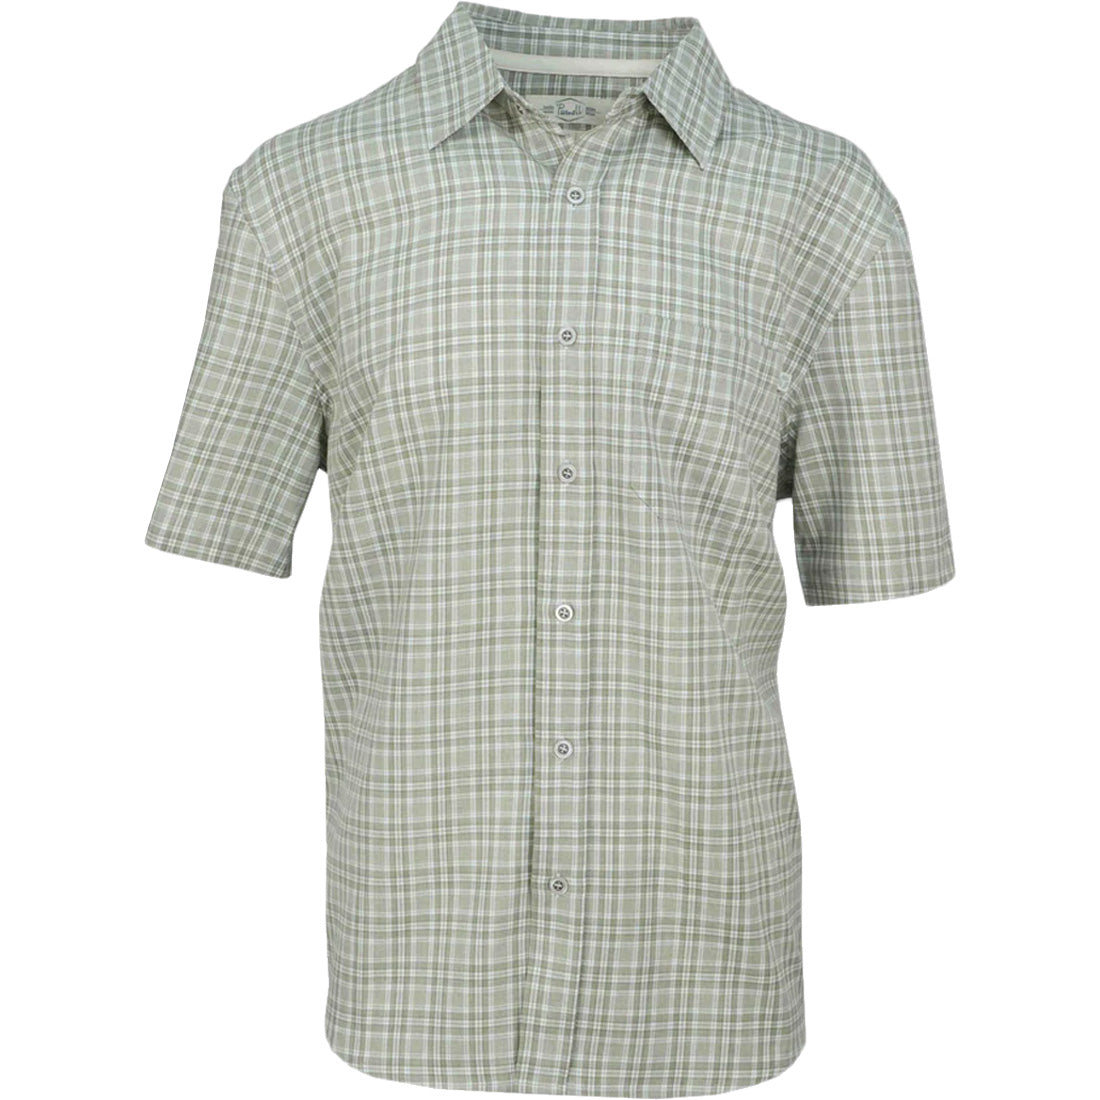 Purnell Harland Quick-Dry Plaid Shirt - Men's